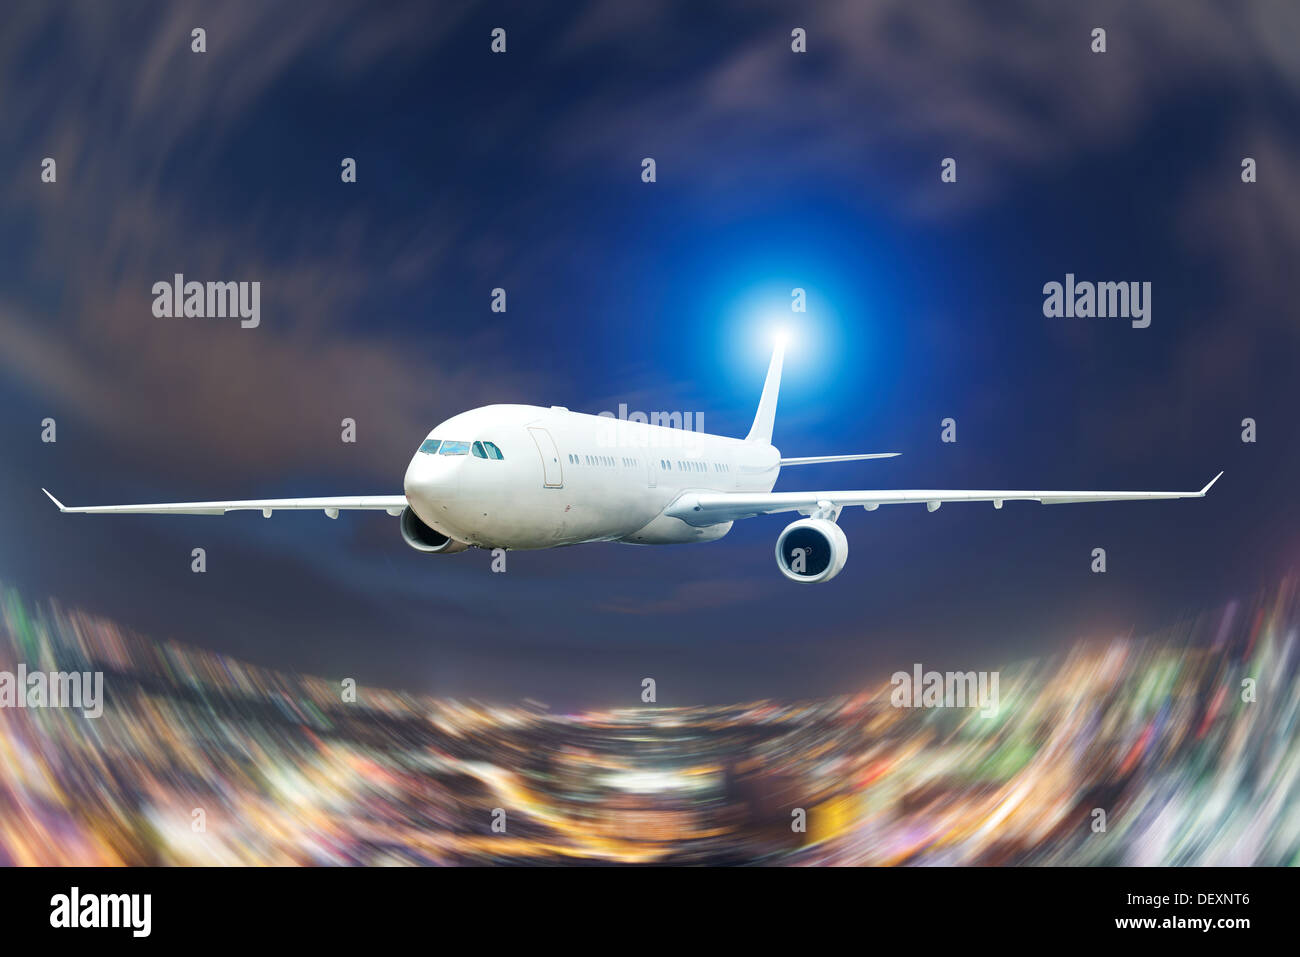 Large passenger plane flying in the sky Stock Photo